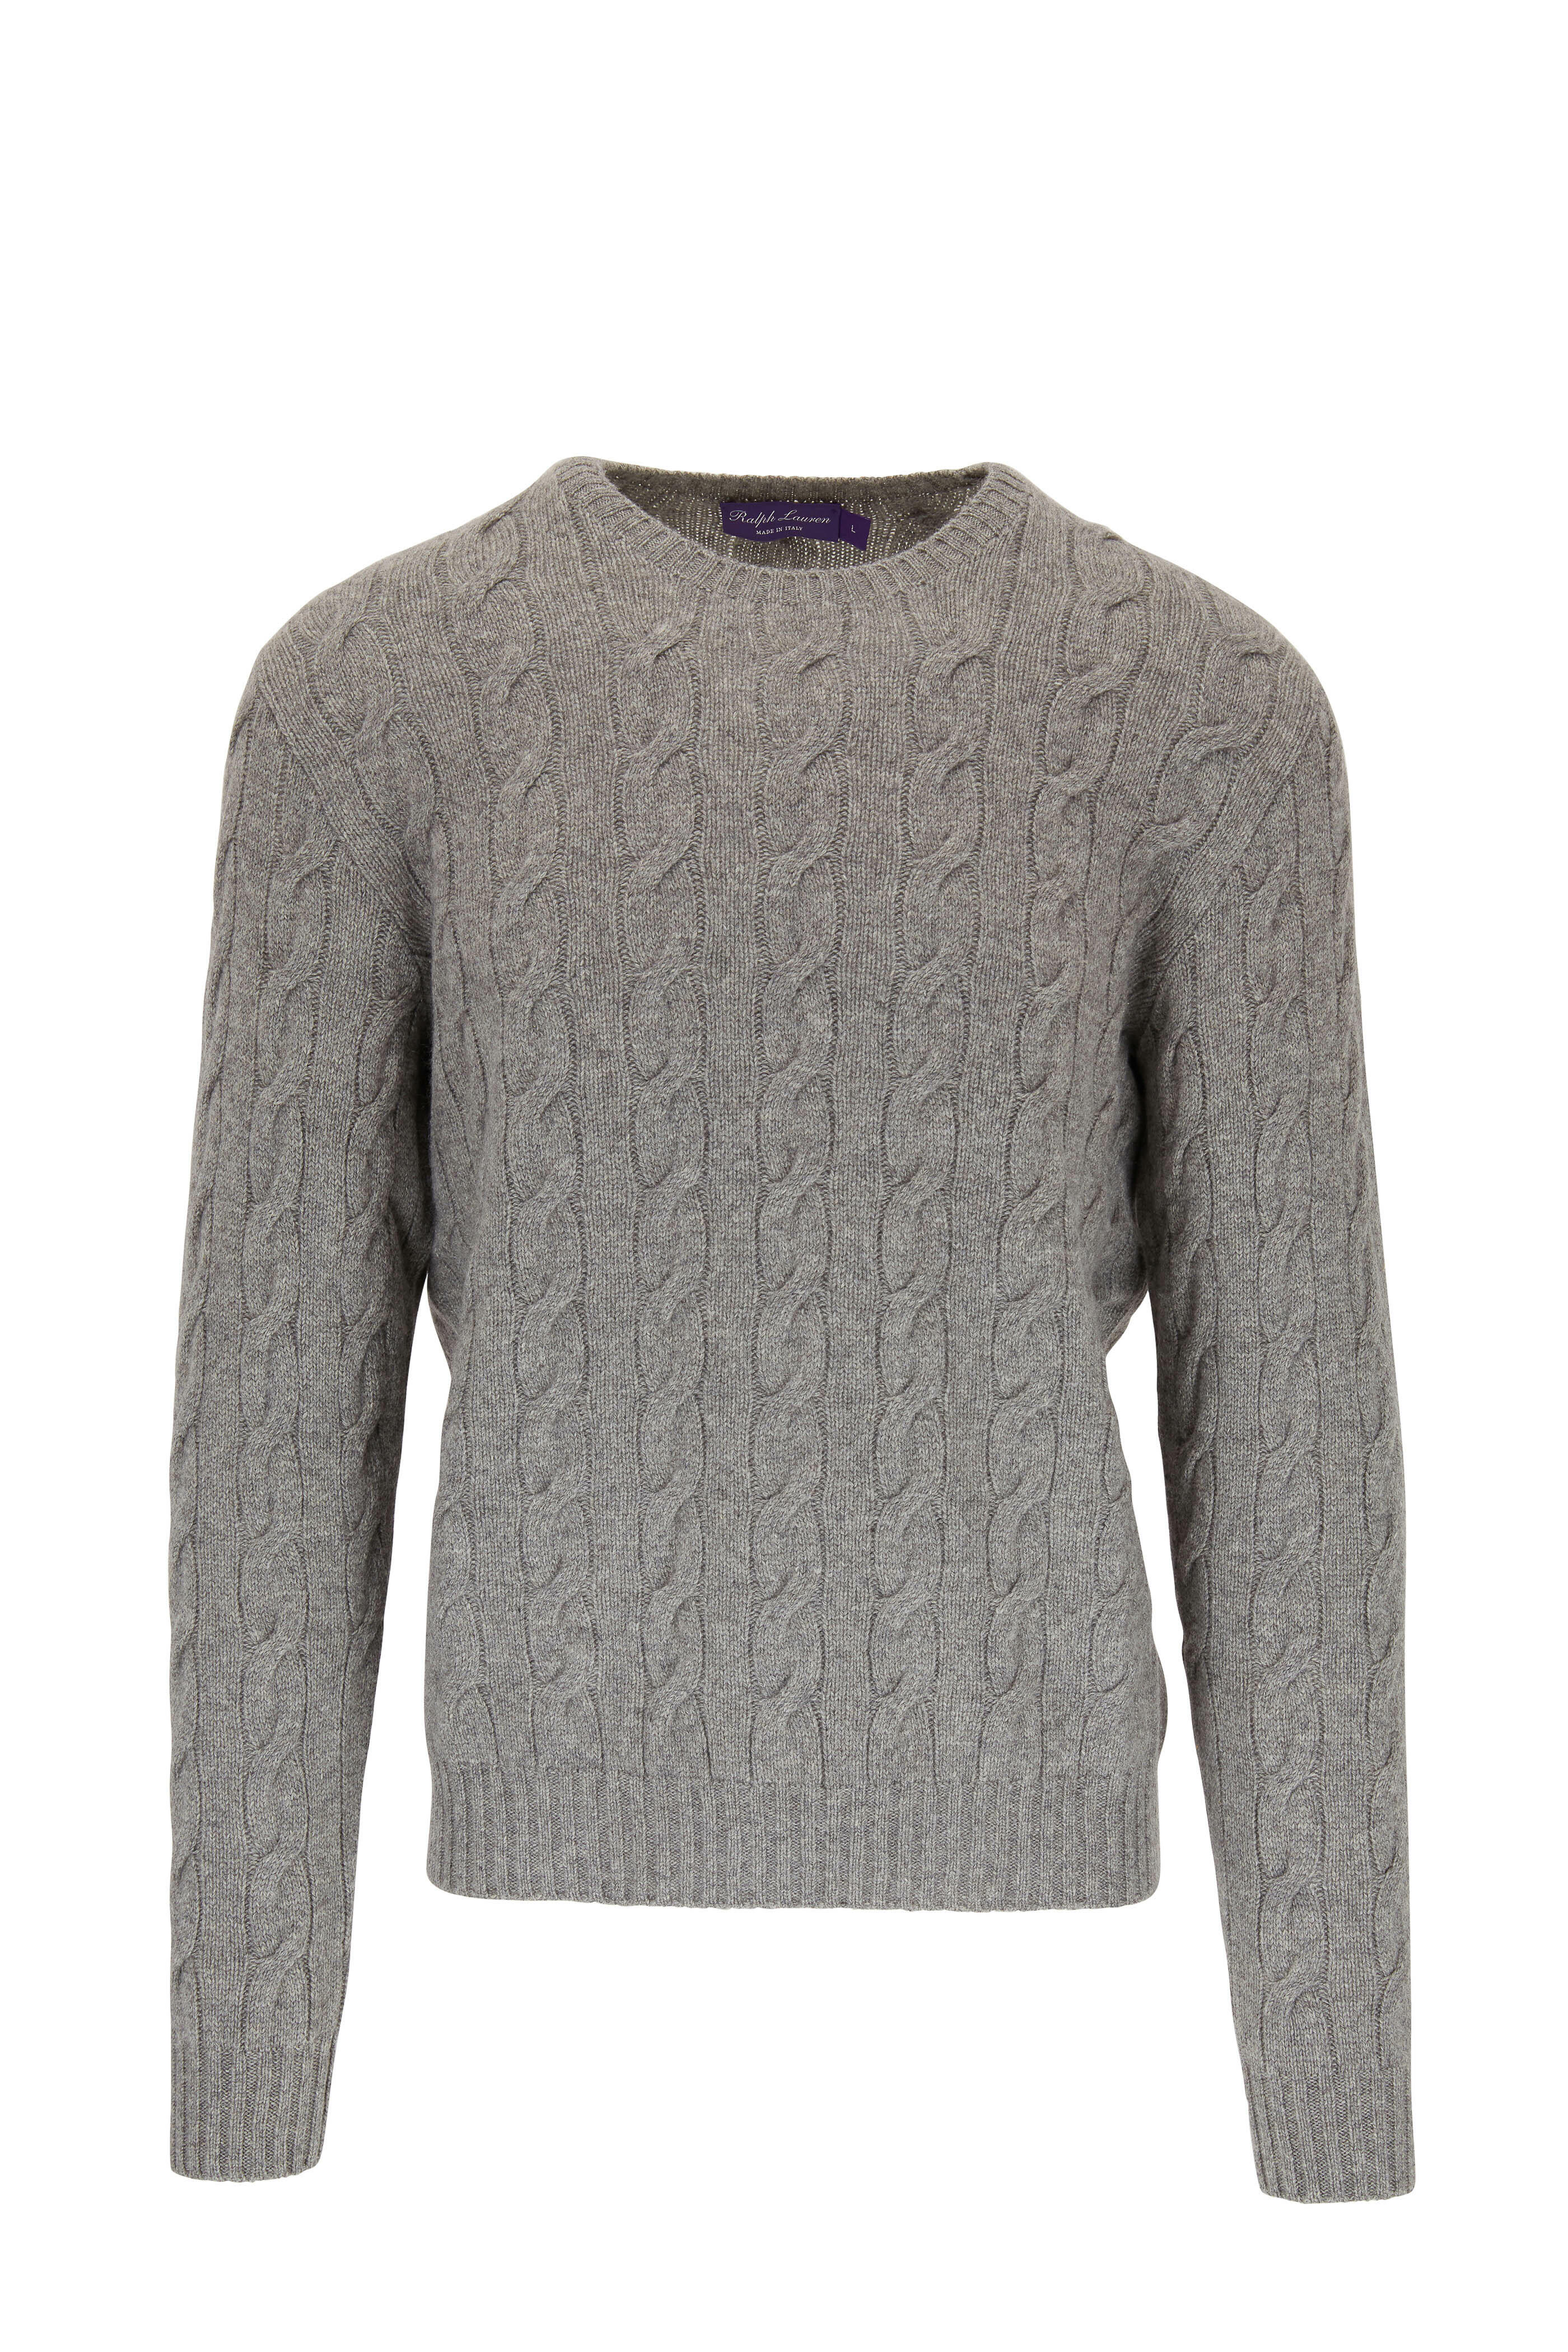 Overgivelse Bore hellig Ralph Lauren Purple Label - Light Gray Cashmere Cable Knit Crewneck Sweater